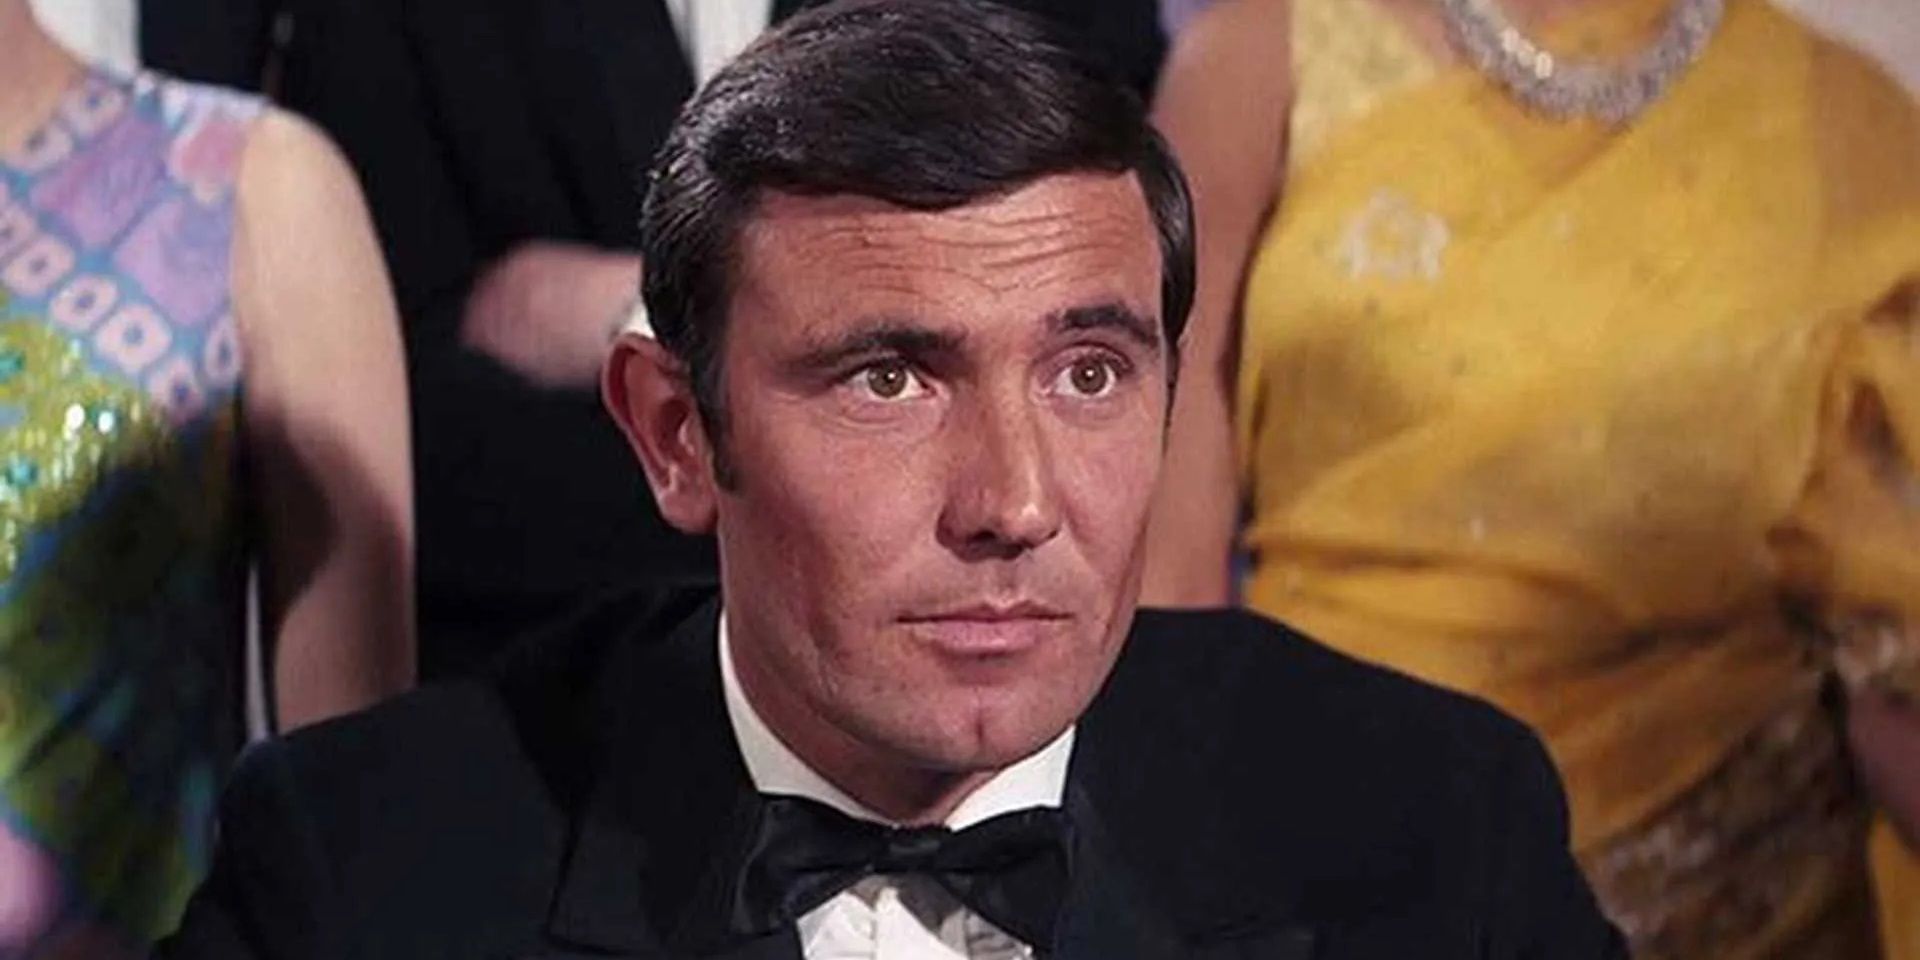 George Lazenby as James Bond wearing a tuxedo